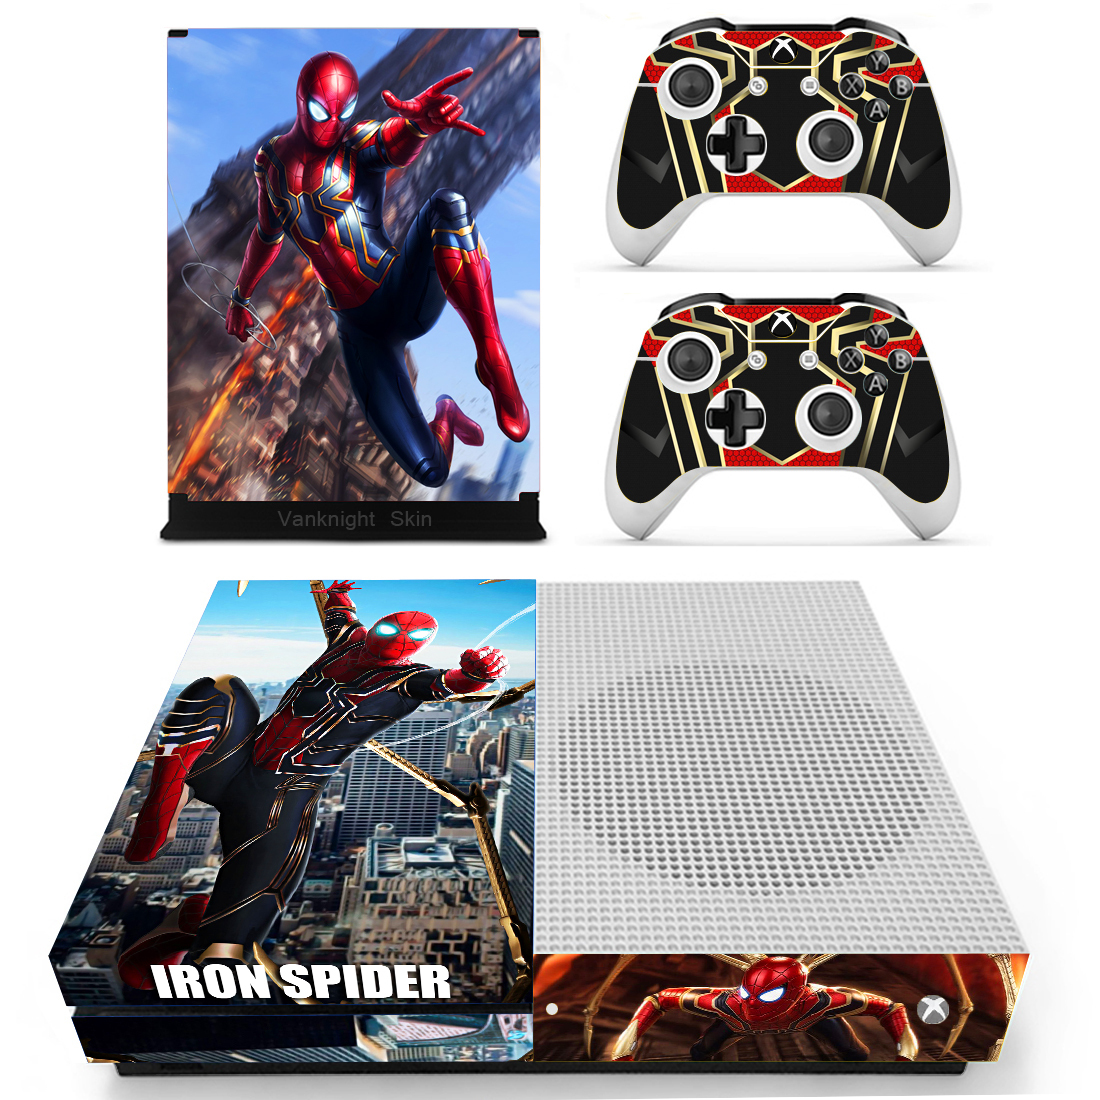 Iron Spider Man Avengers Marvel Xbox One S Slim Console